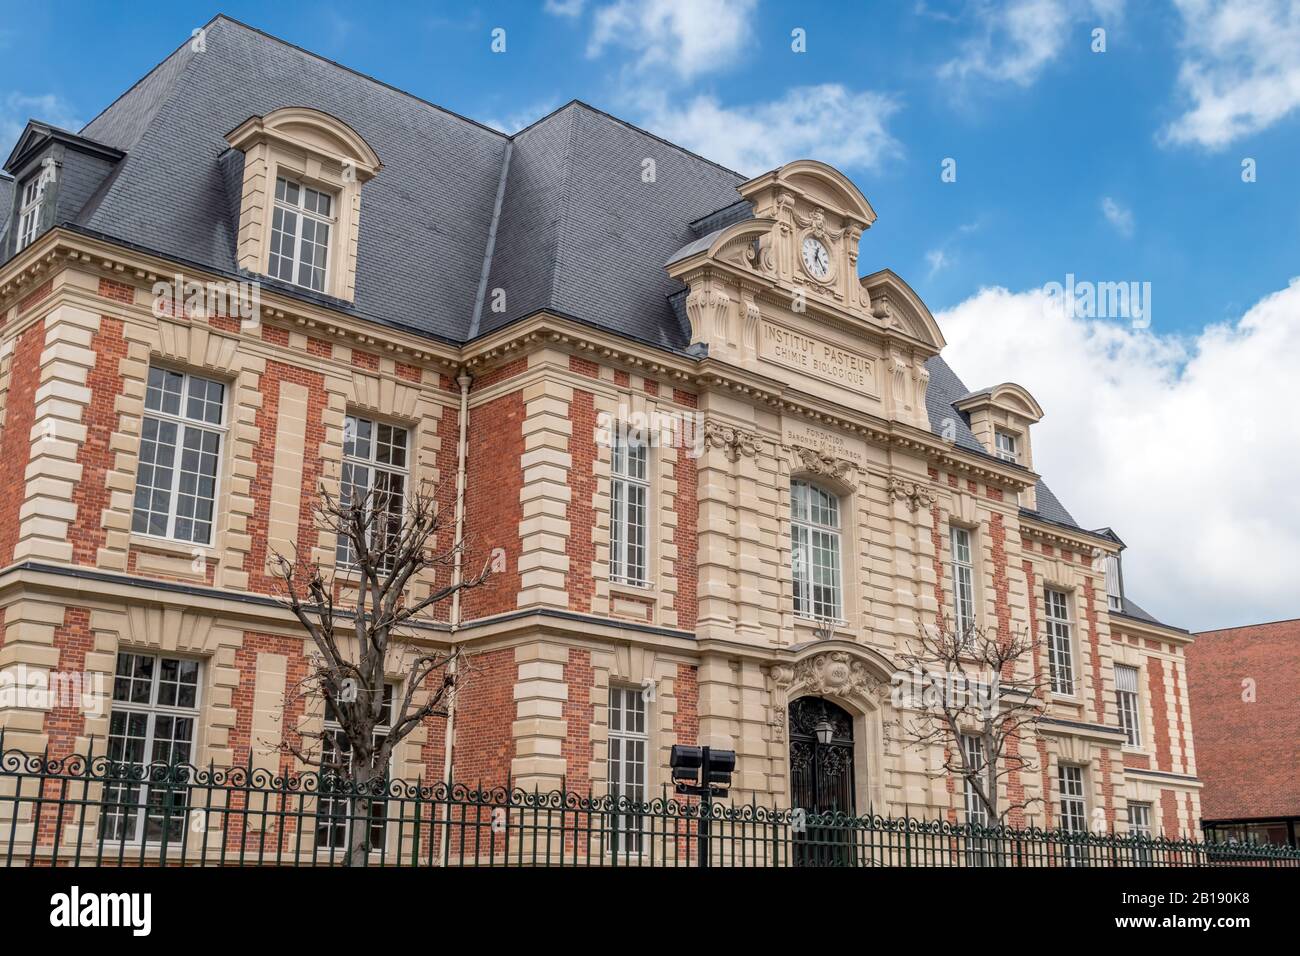 Old building of the Pasteur institute in Paris Stock Photo